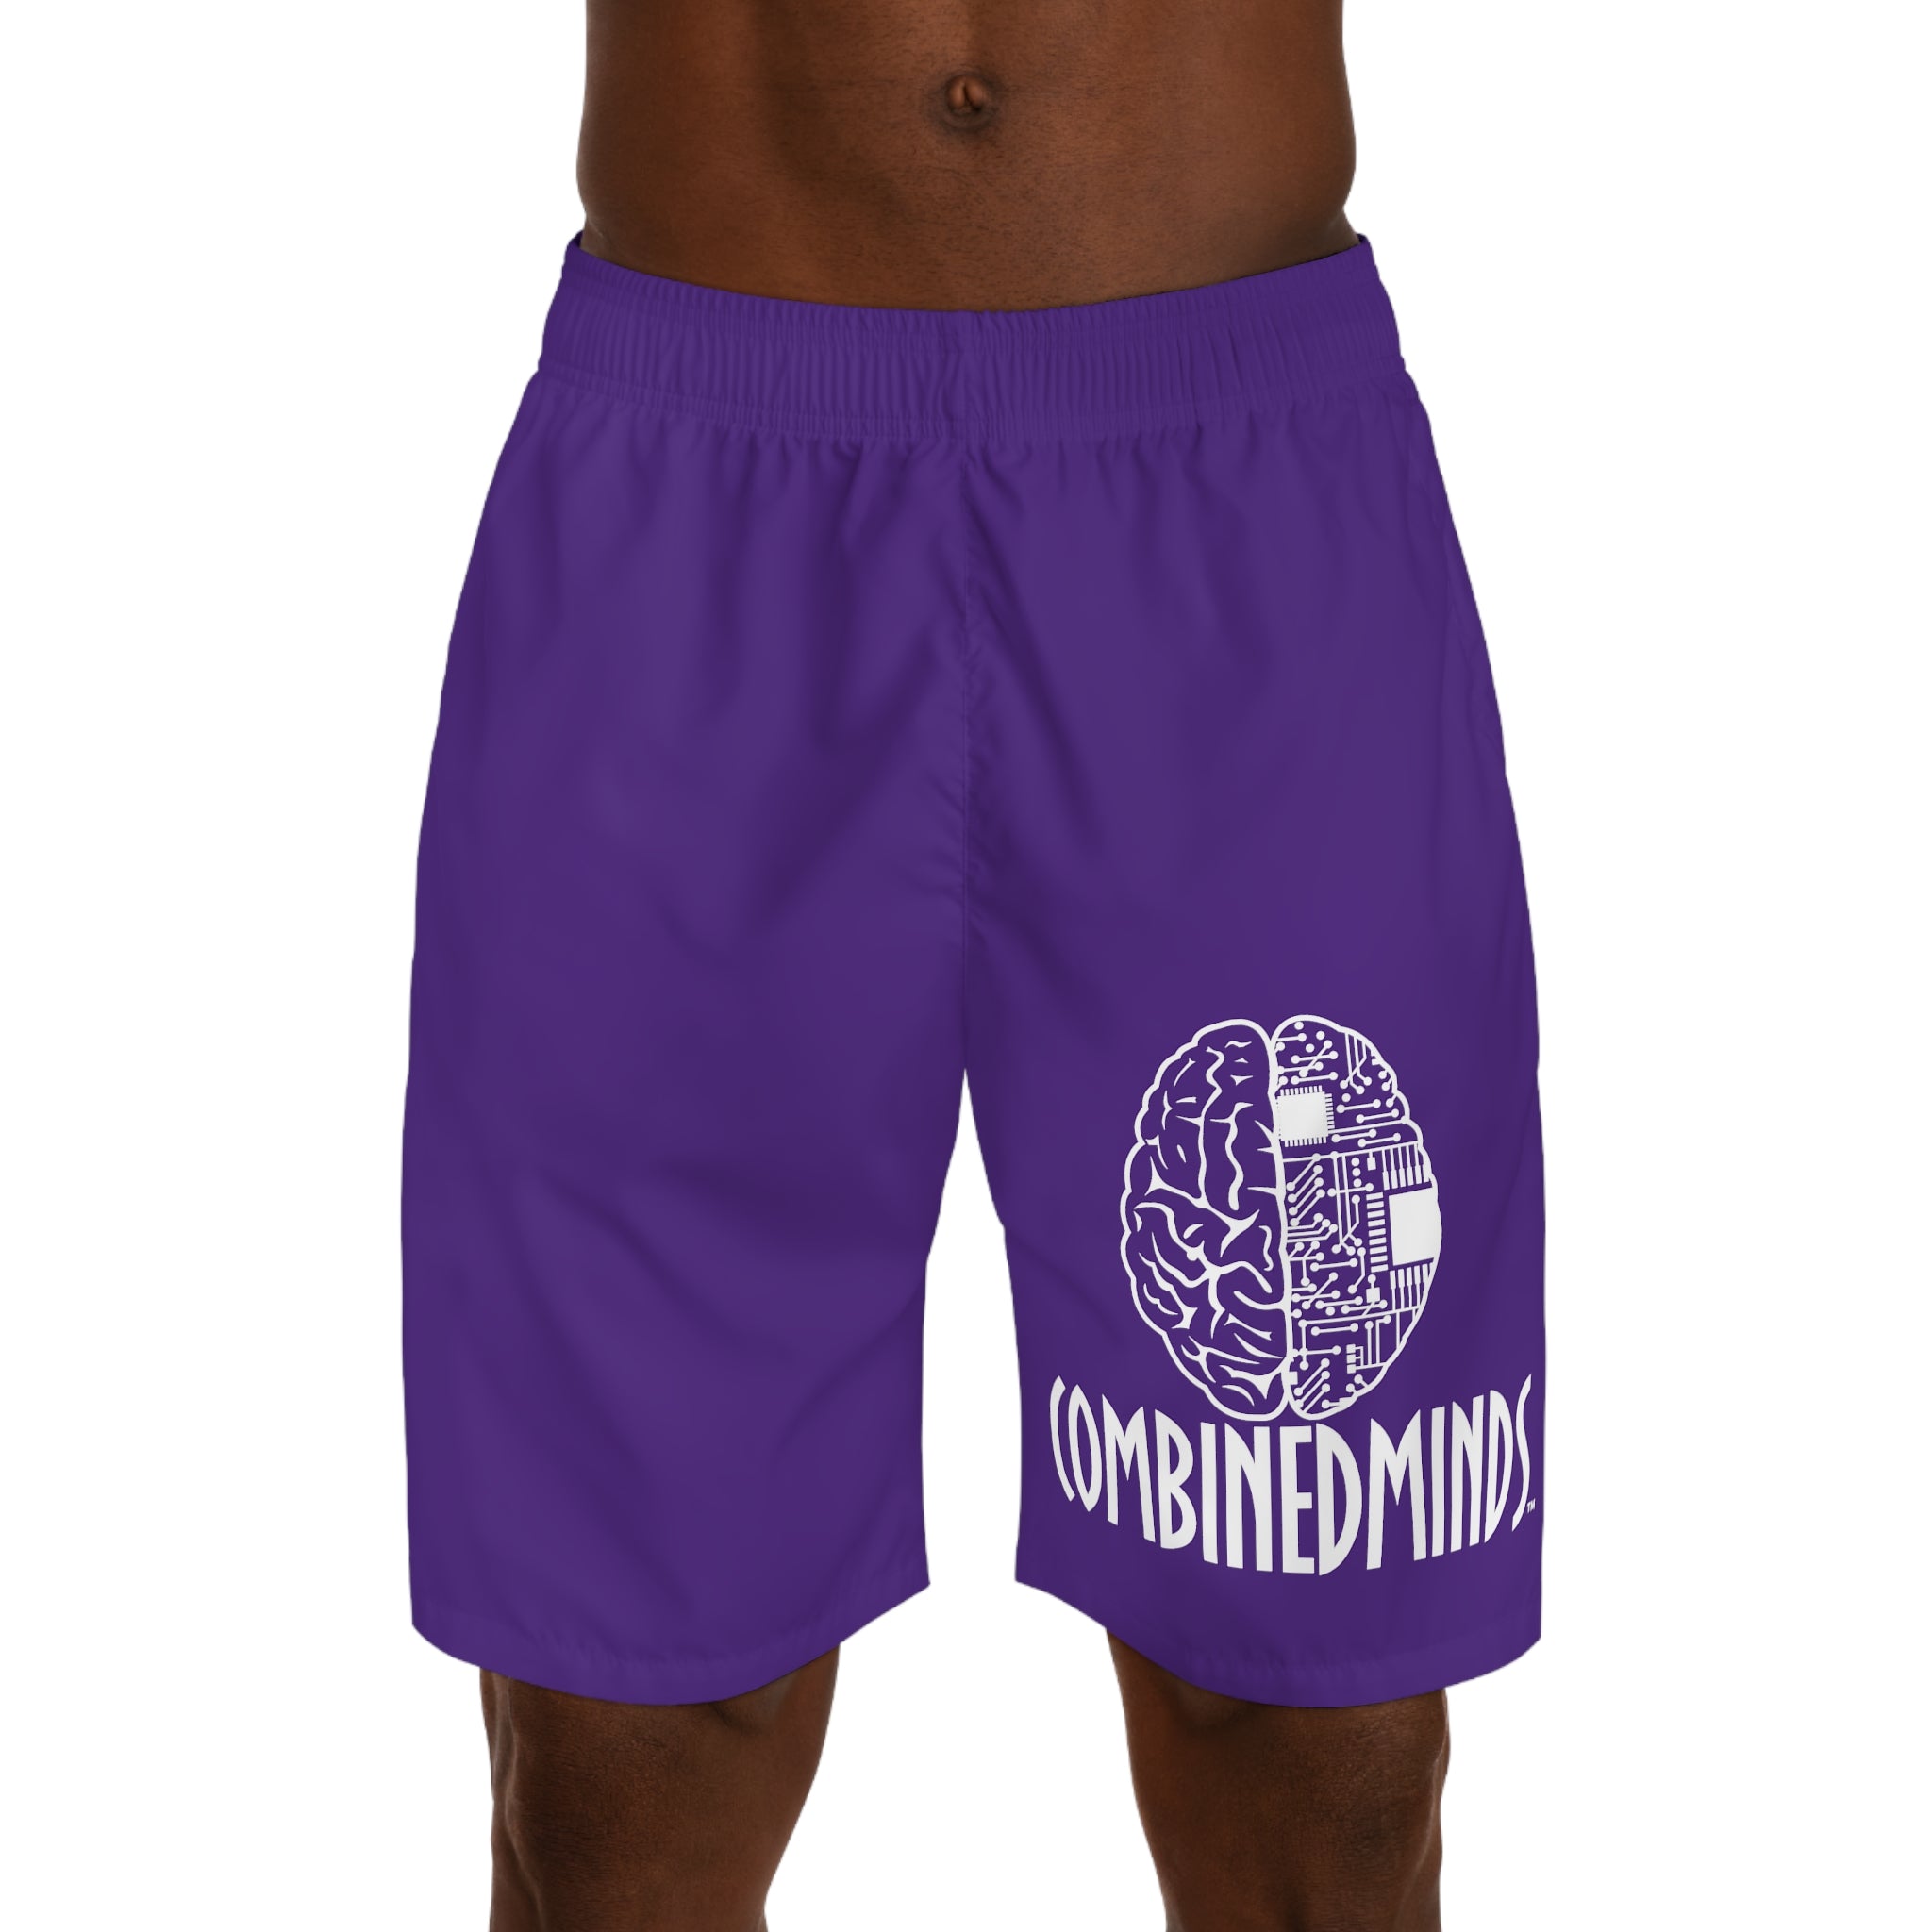 CombinedMinds Men's Jogger Shorts Purple/White Logo